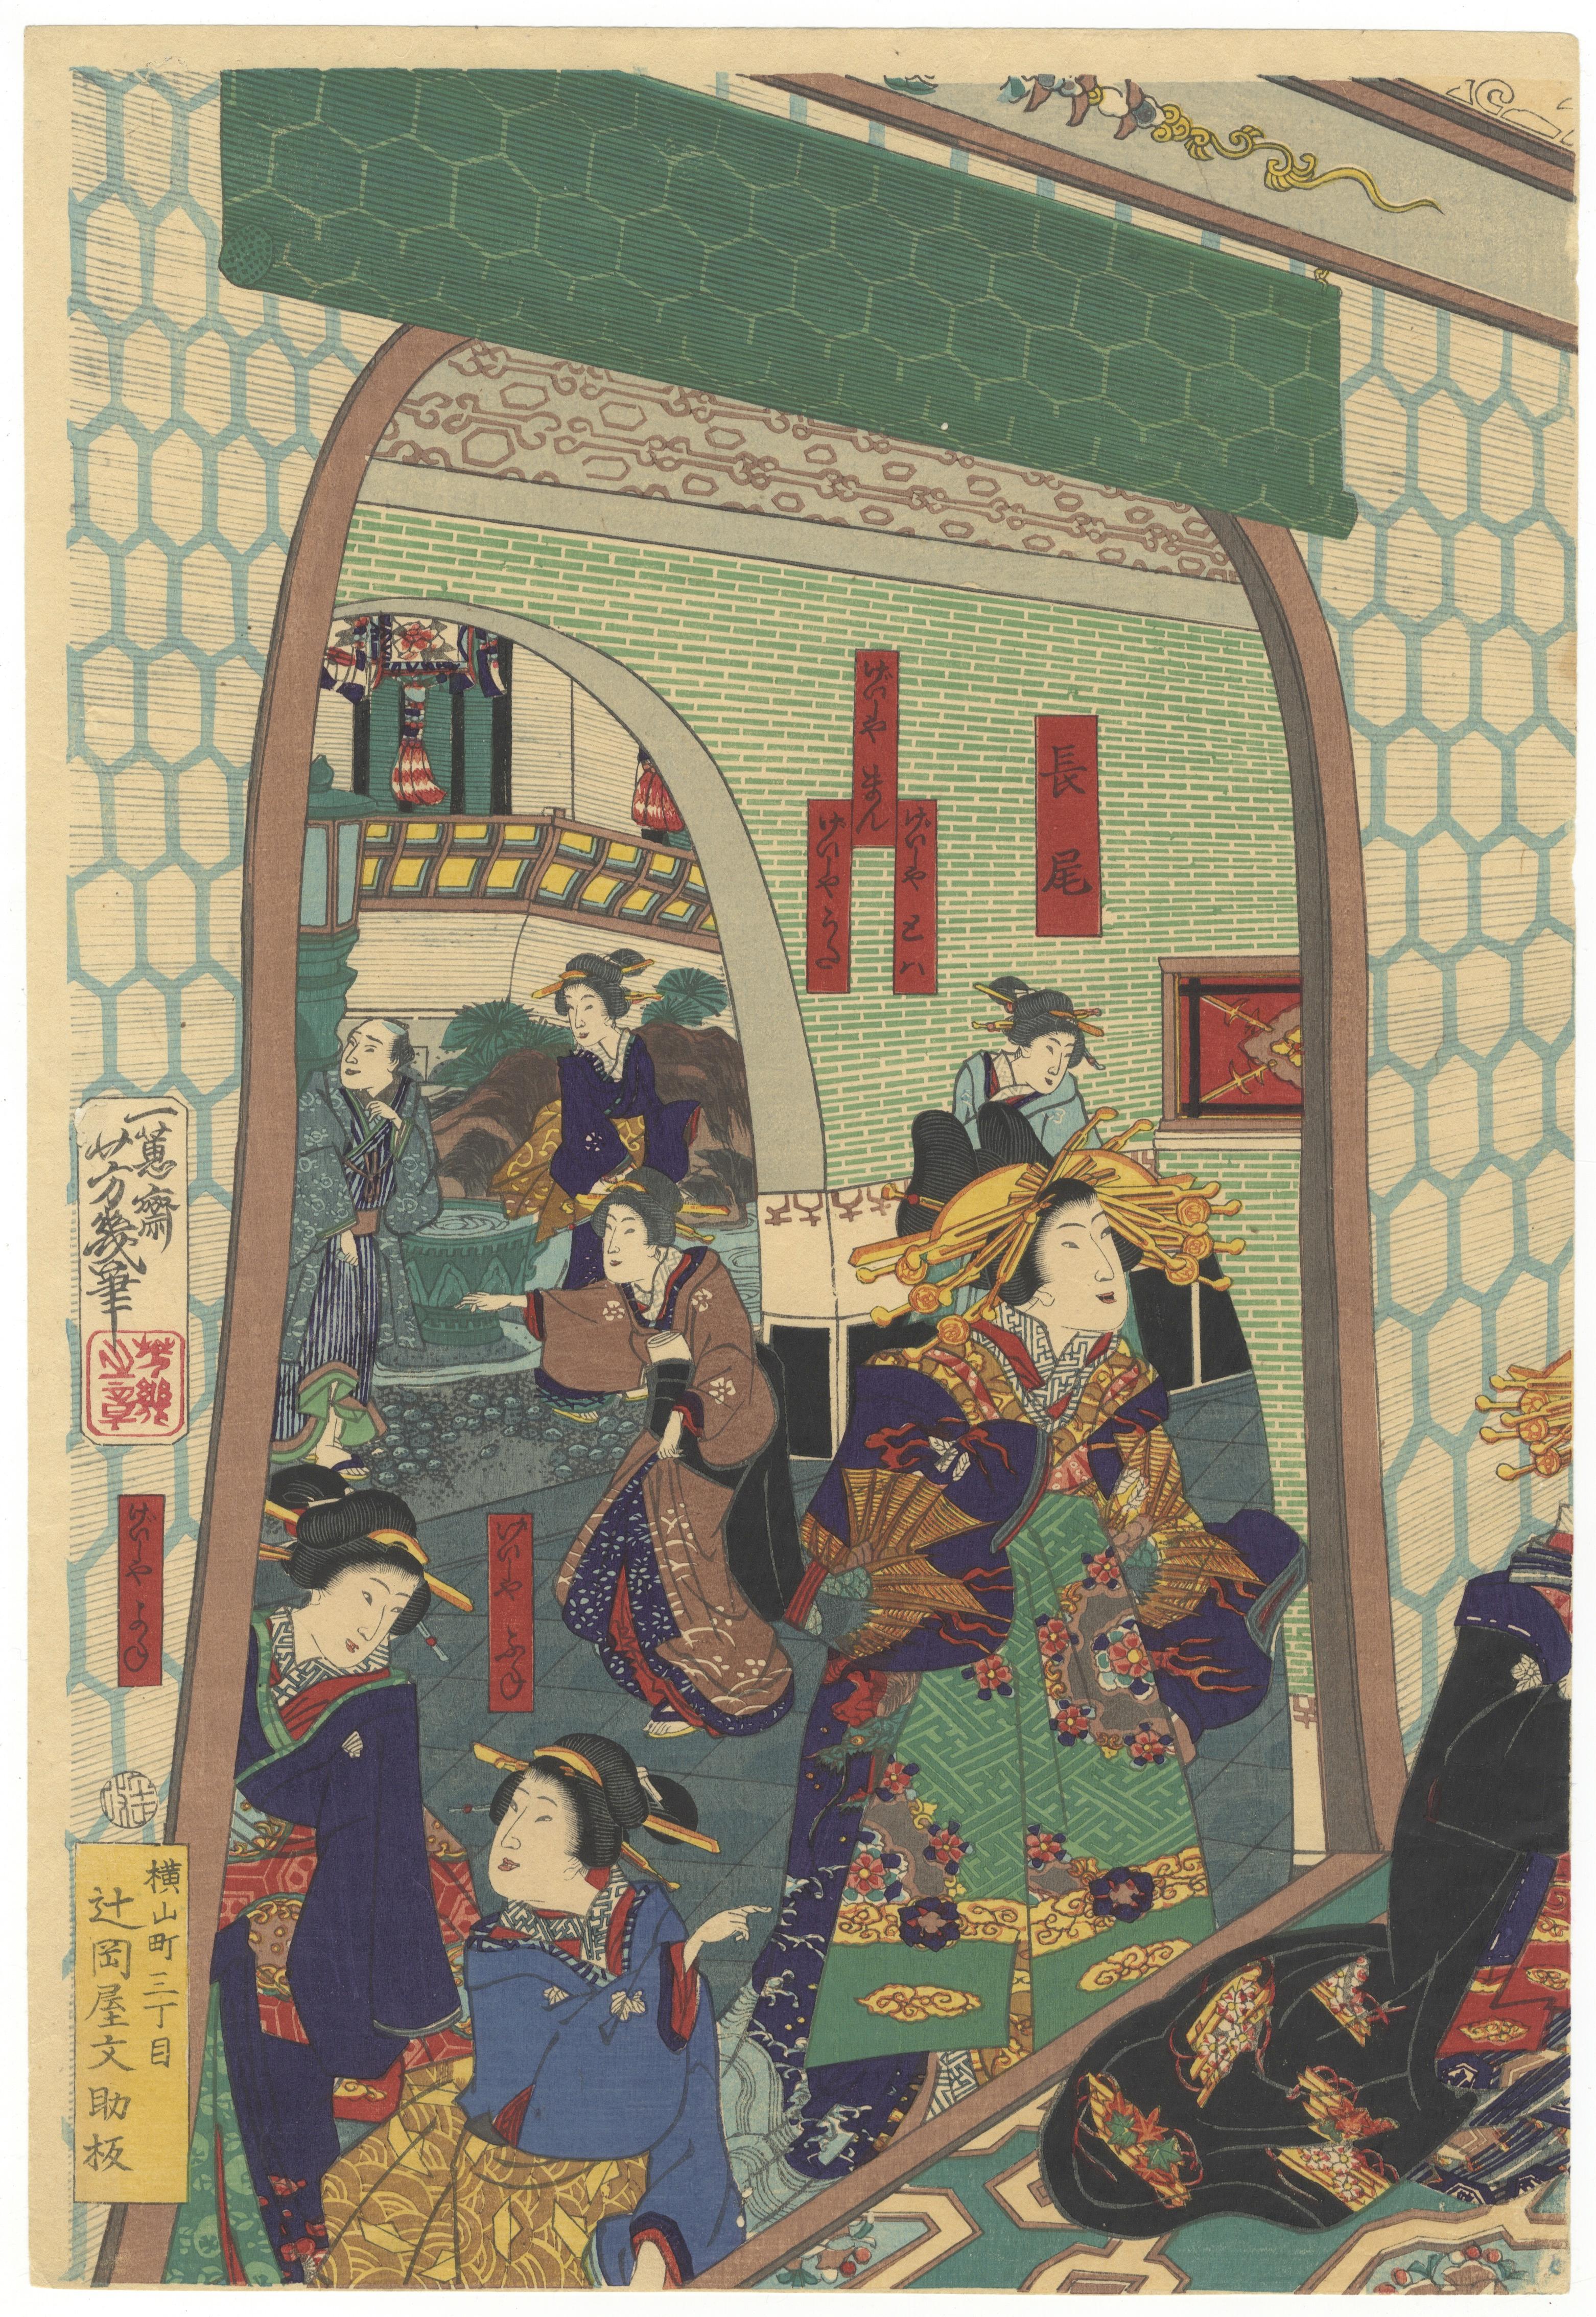 Artist: Yoshiiku Utagawa (1833-1904)
Title: Bath House in Fukagawa
Publisher: Tsujiokaya Bunsuke
Date: 1870
Size: (L) 25.7 x 37.5 (C) 25.6 x 37.6 (R) 25.6 x 37.6 cm

A panoramic view of a bath house in Fukagawa. The district was known for its